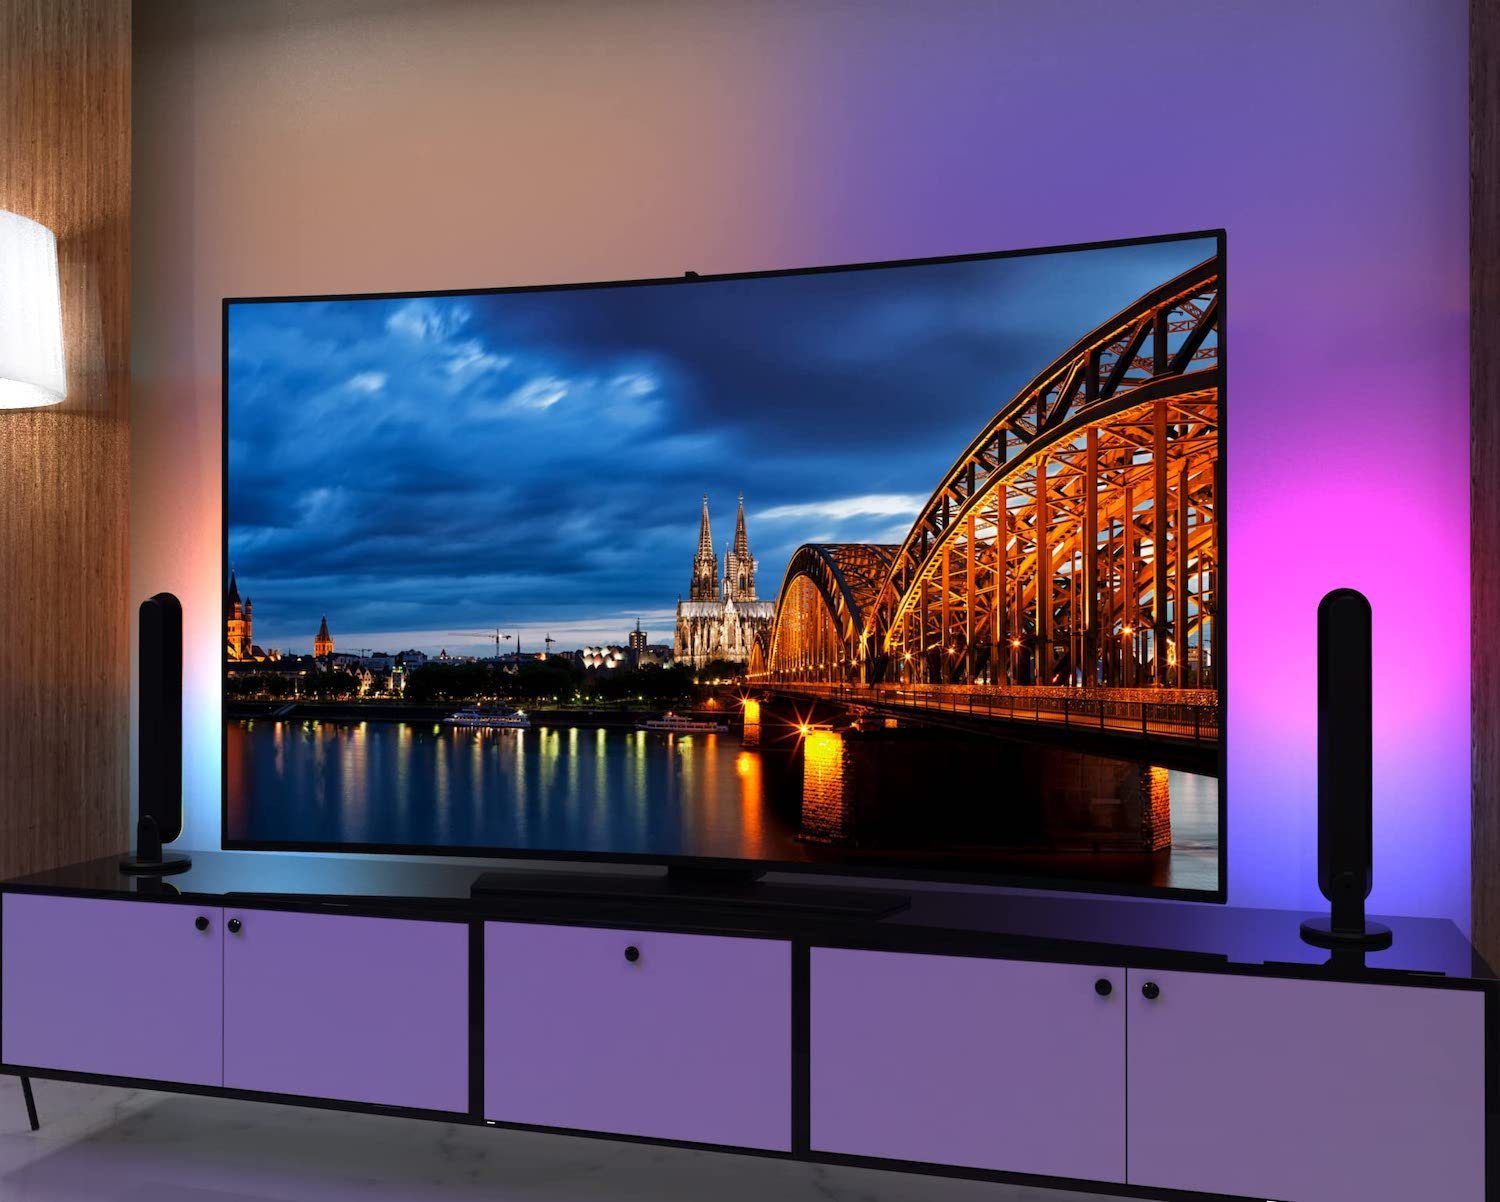 Woward Hintergrundleuchte Lampe, TV Smart Alexa Sync Music PC 2er LED Gaming Smarte RGB RGB